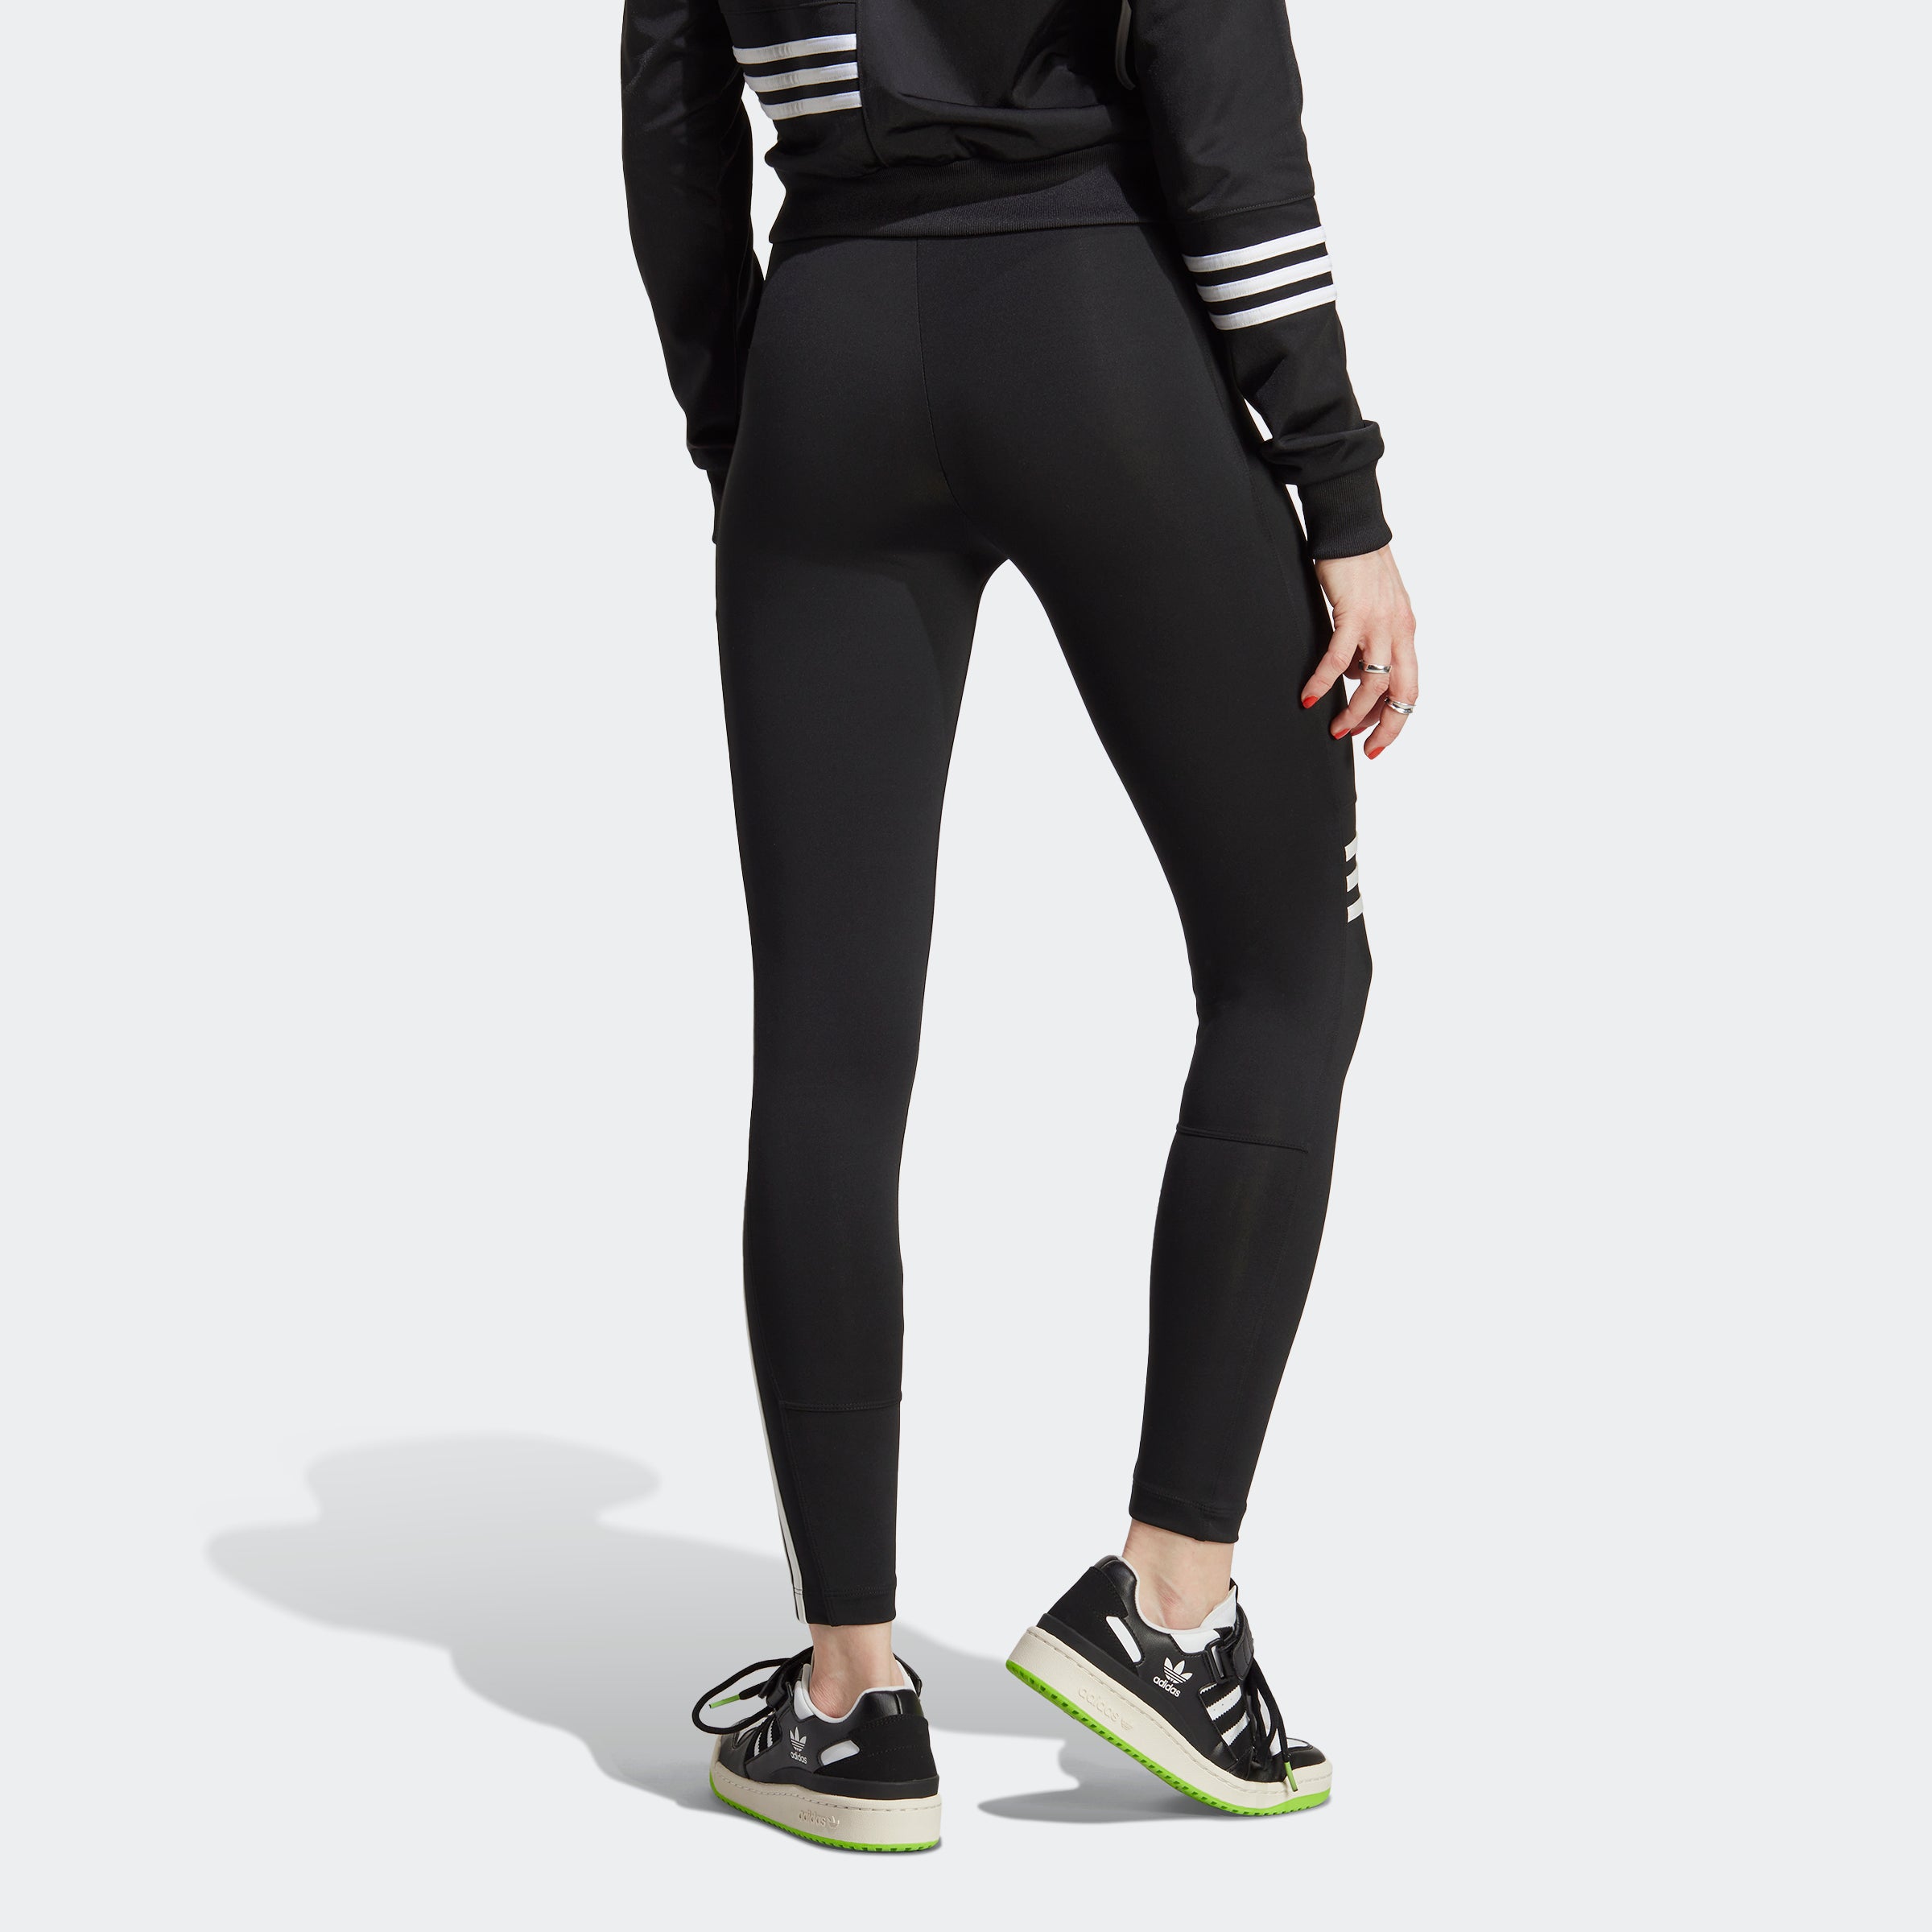 adidas Women's 3 Stripe Active Tights Leggings  Sporty outfits, Outfits  with leggings, Addidas outfits